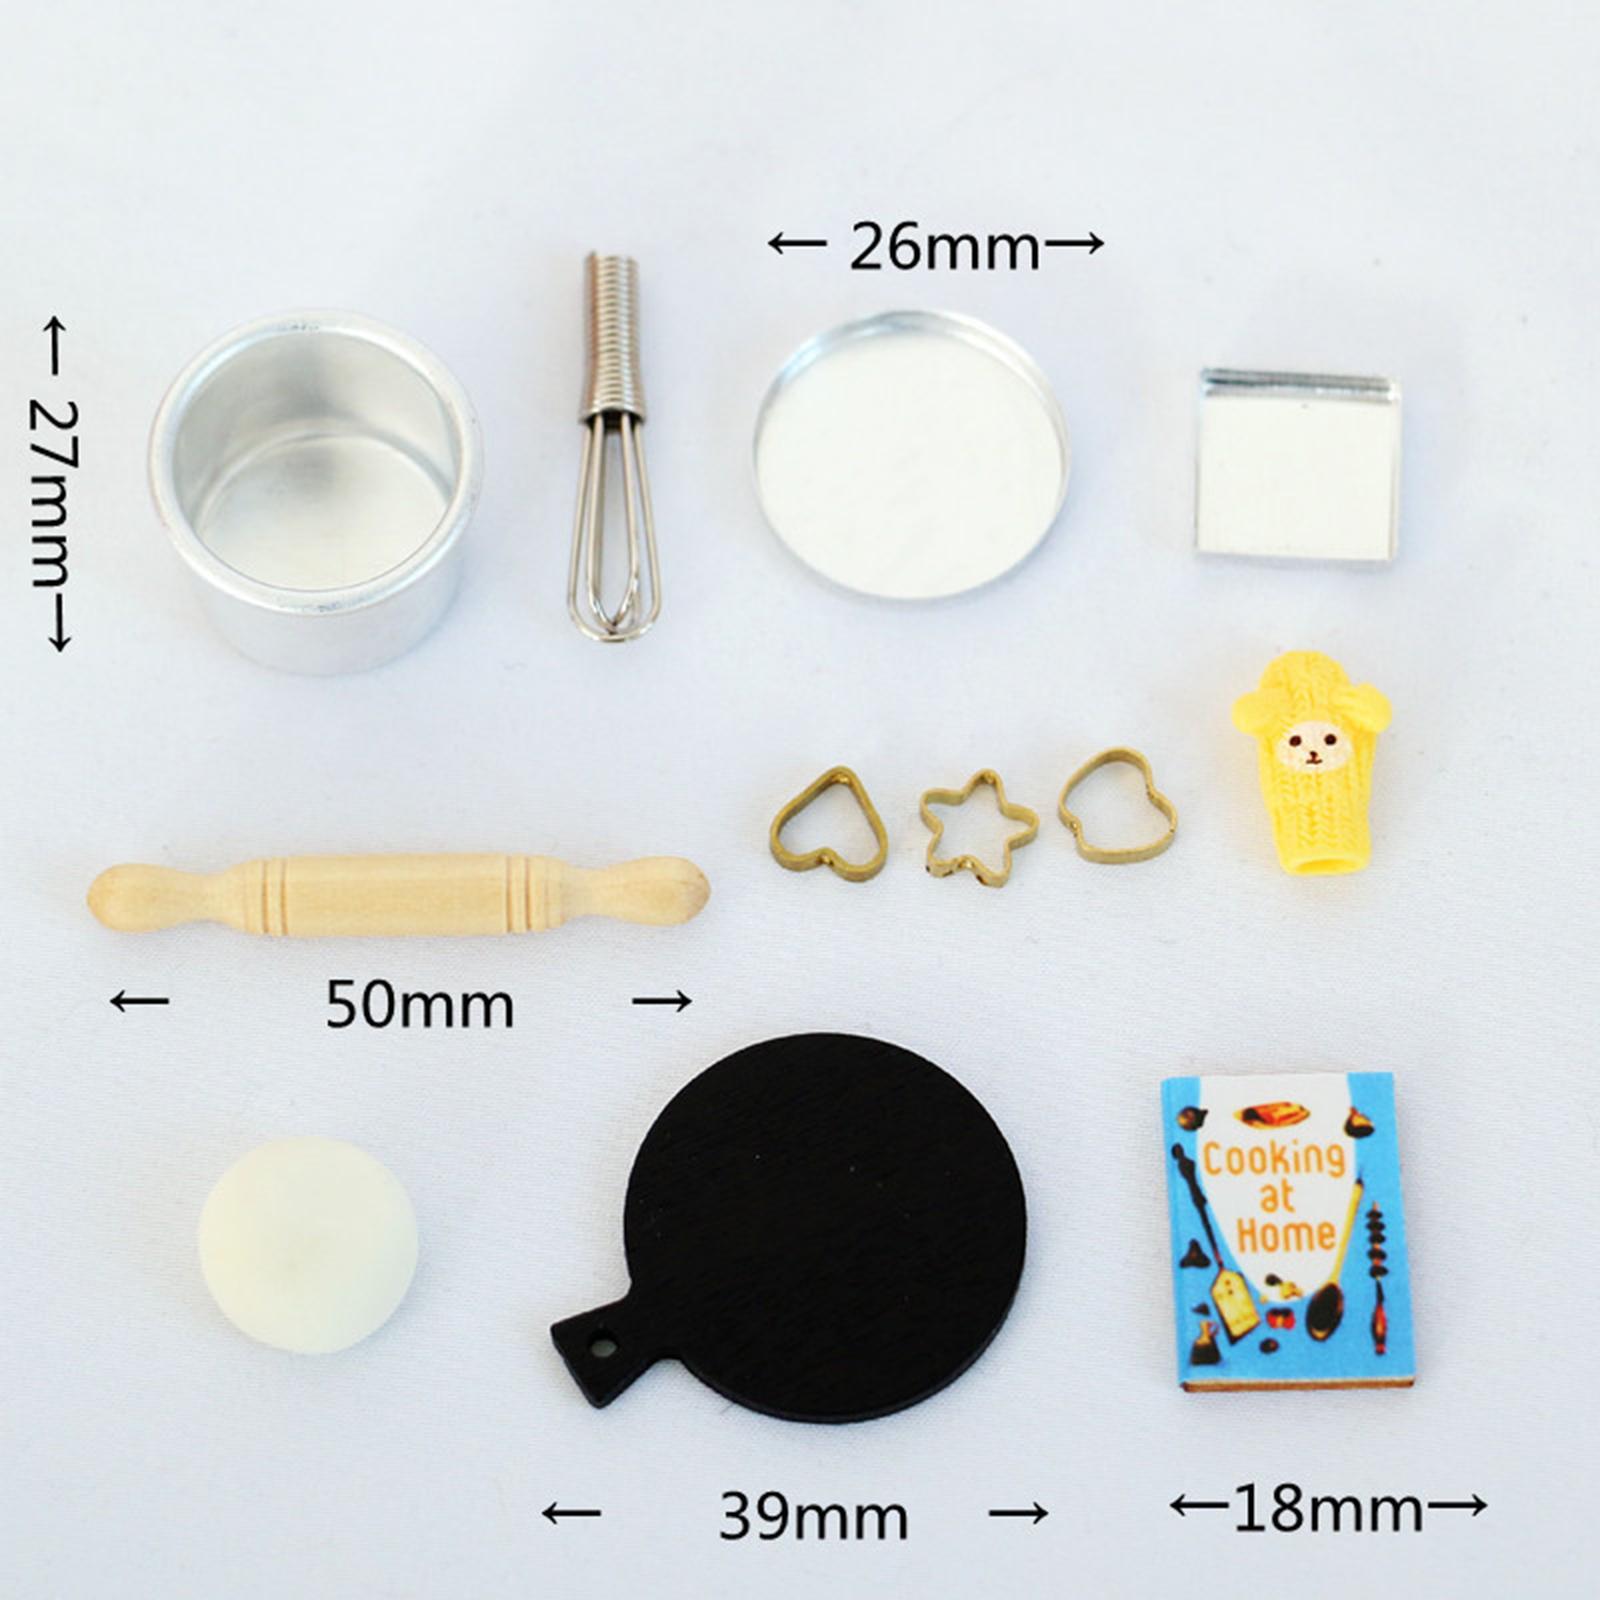 Food Baking Scene Simulation Baking Scene Set Miniature Baking Pan Beater for Gift